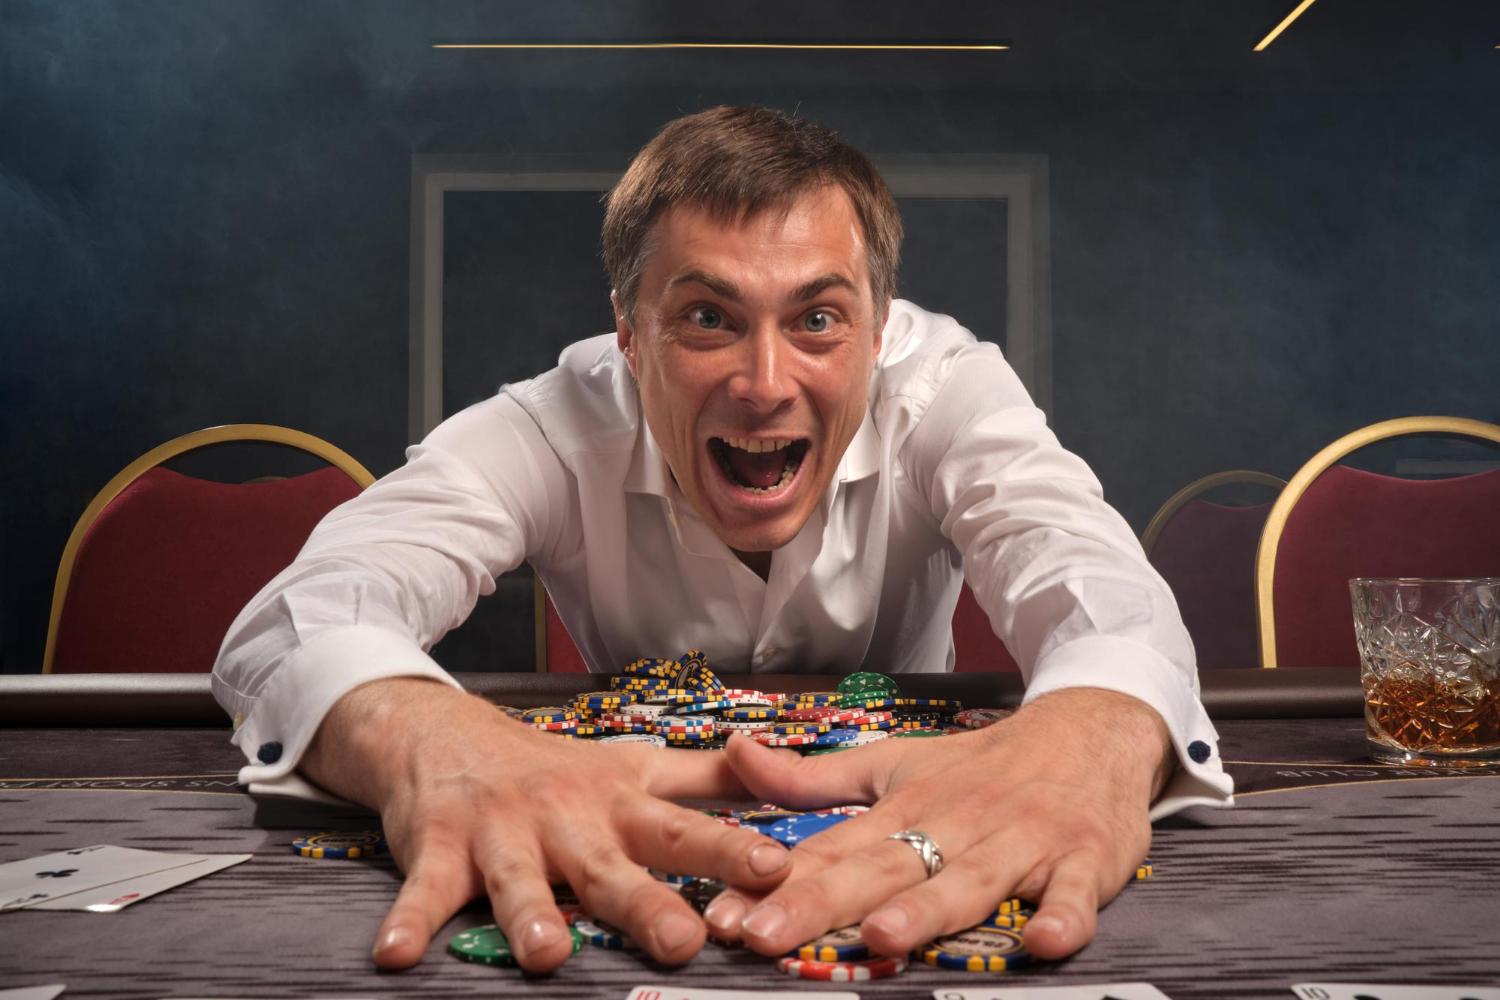 Gambling: Innocent Fun or Risky Business?